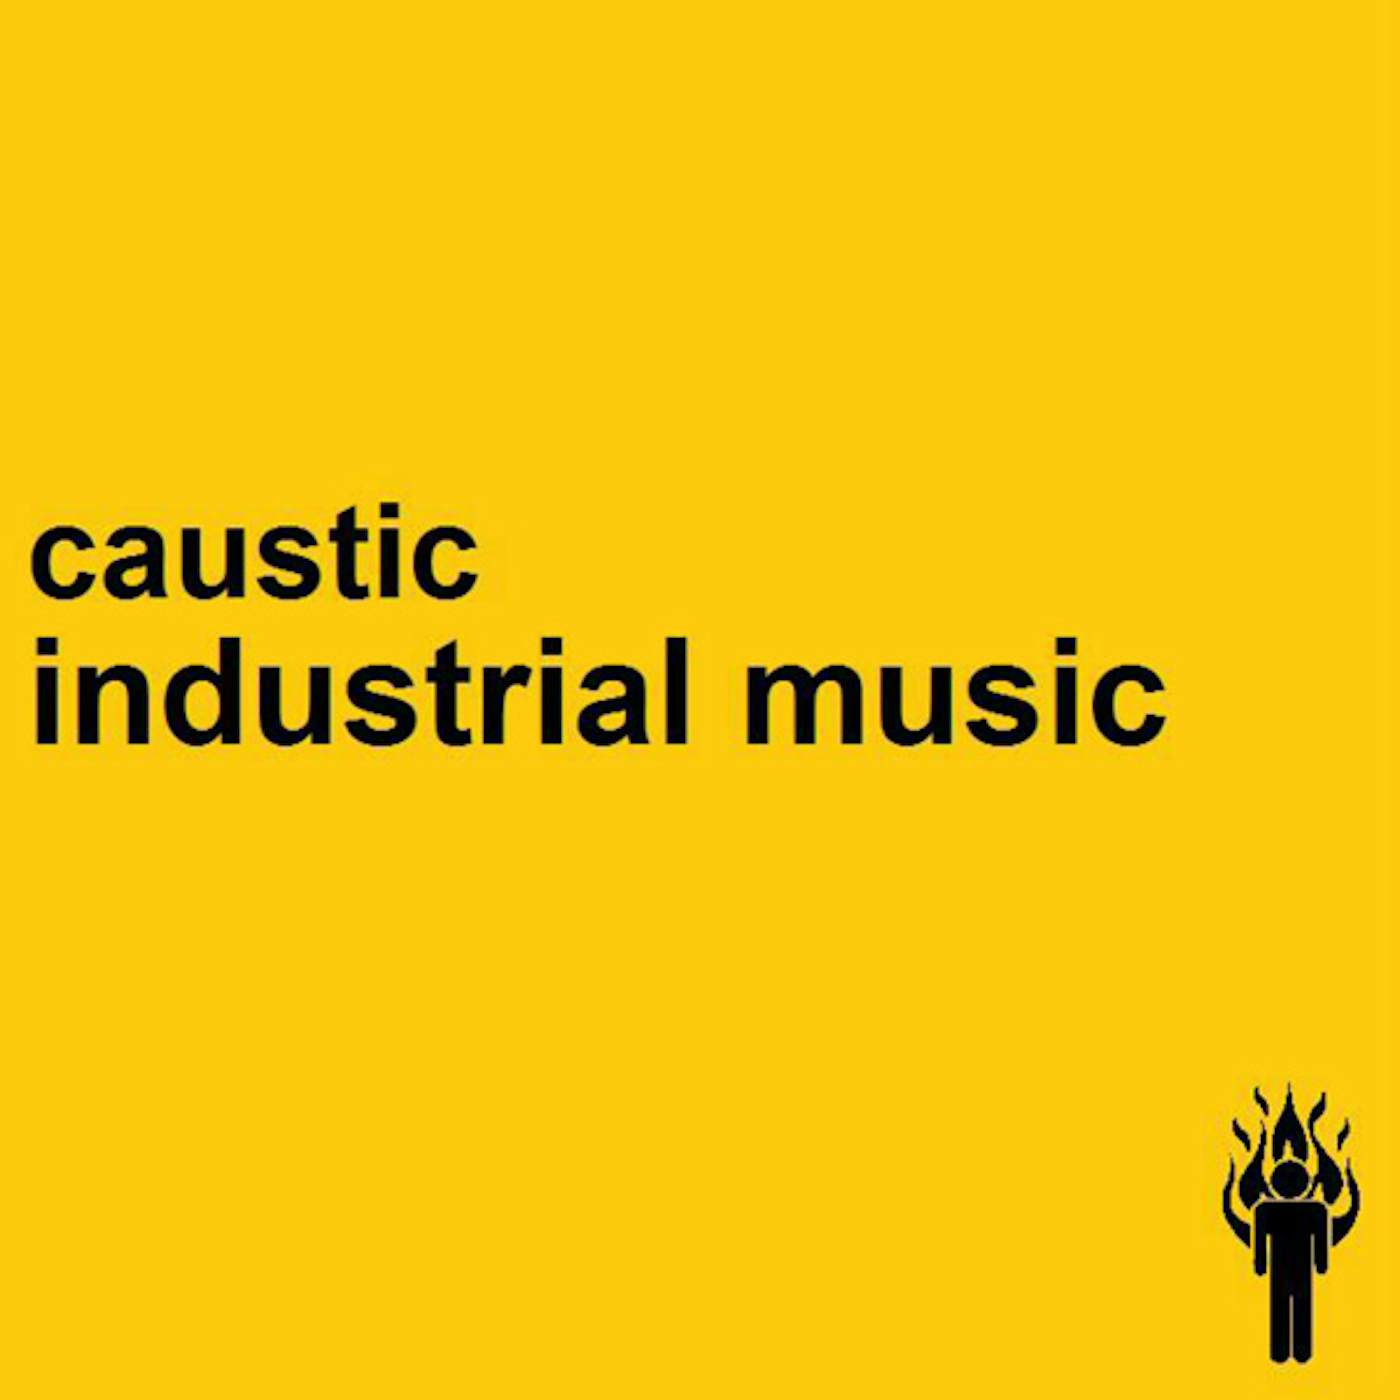 Caustic INDUSTRIAL MUSIC CD